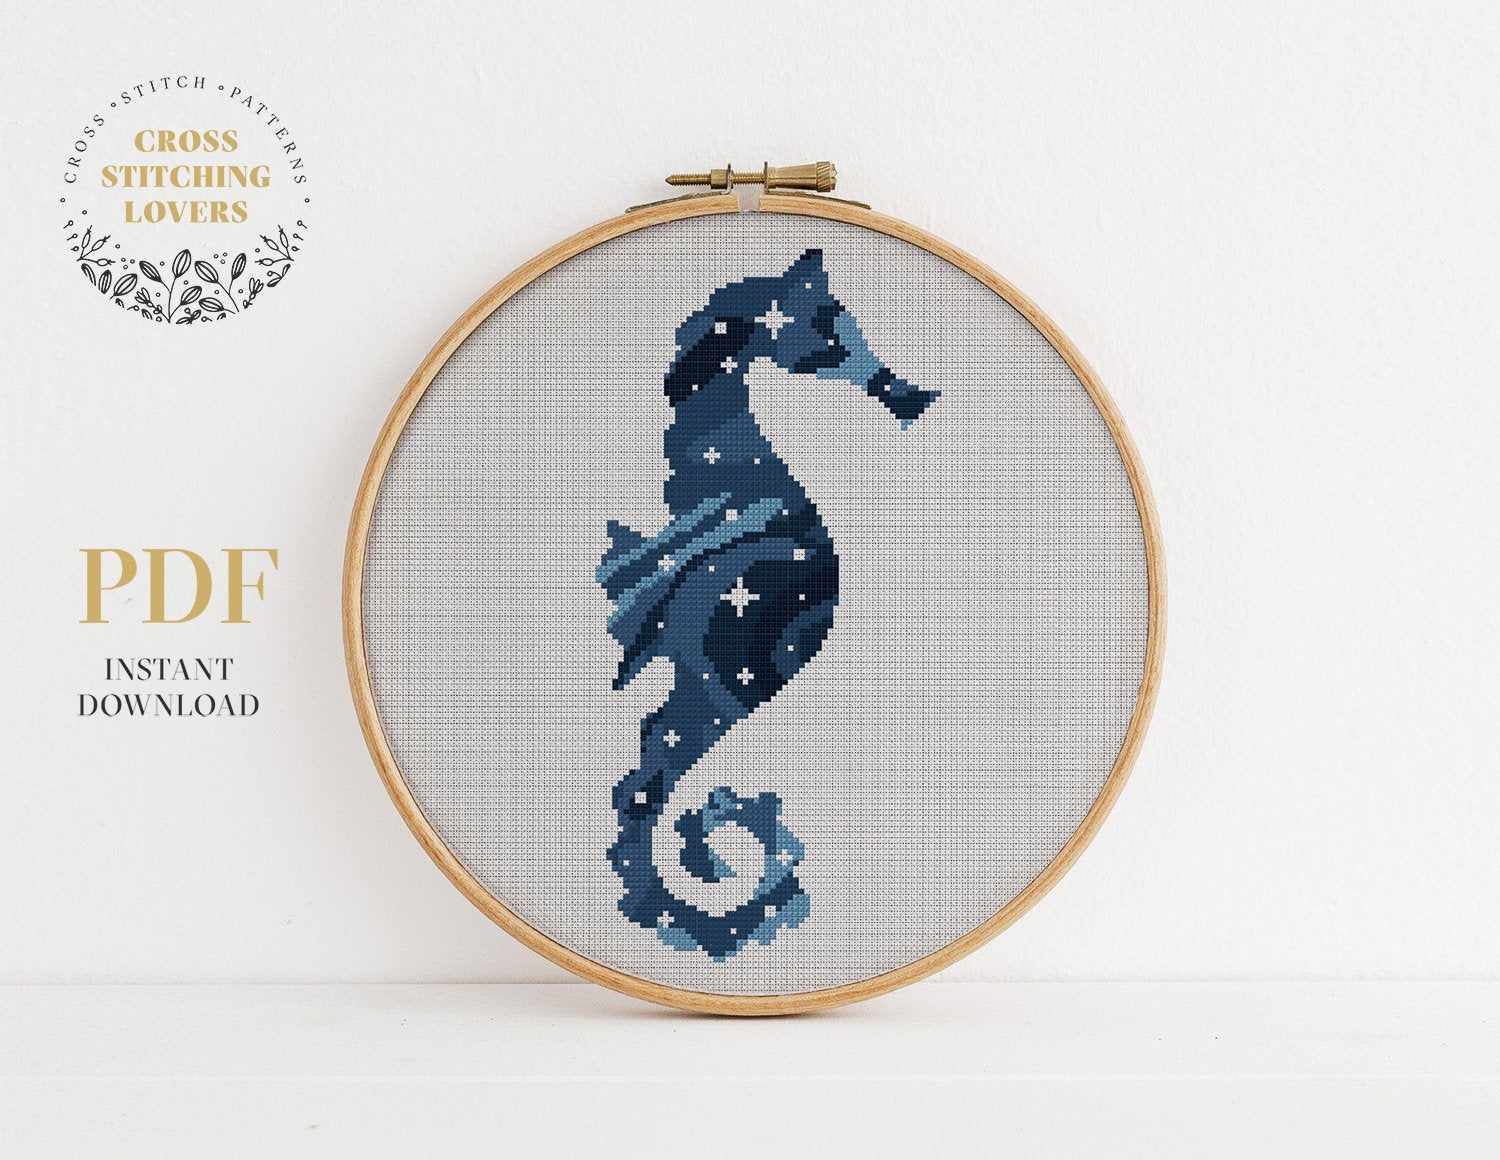 Seahorse silhouette - Cross stitch pattern